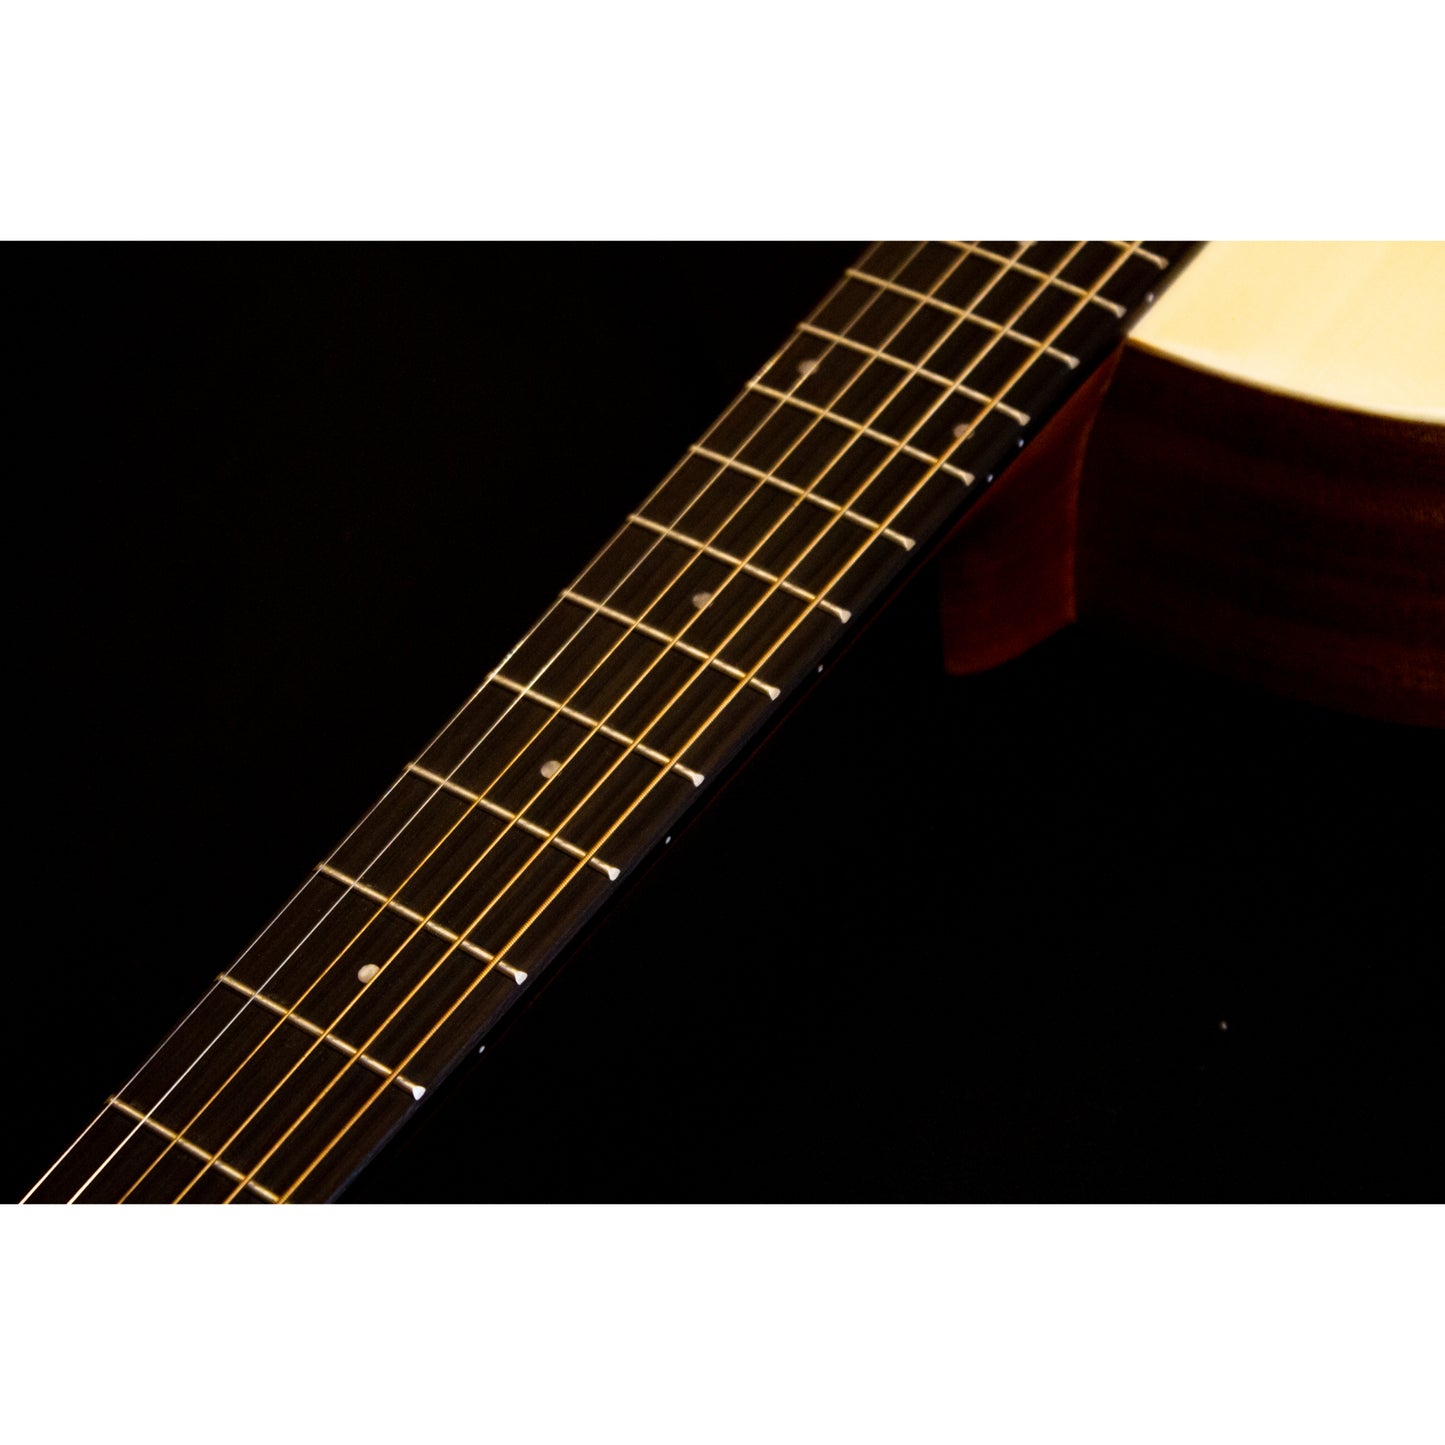 Richtone RT BG1 Travel Acoustic Guitar - Natural